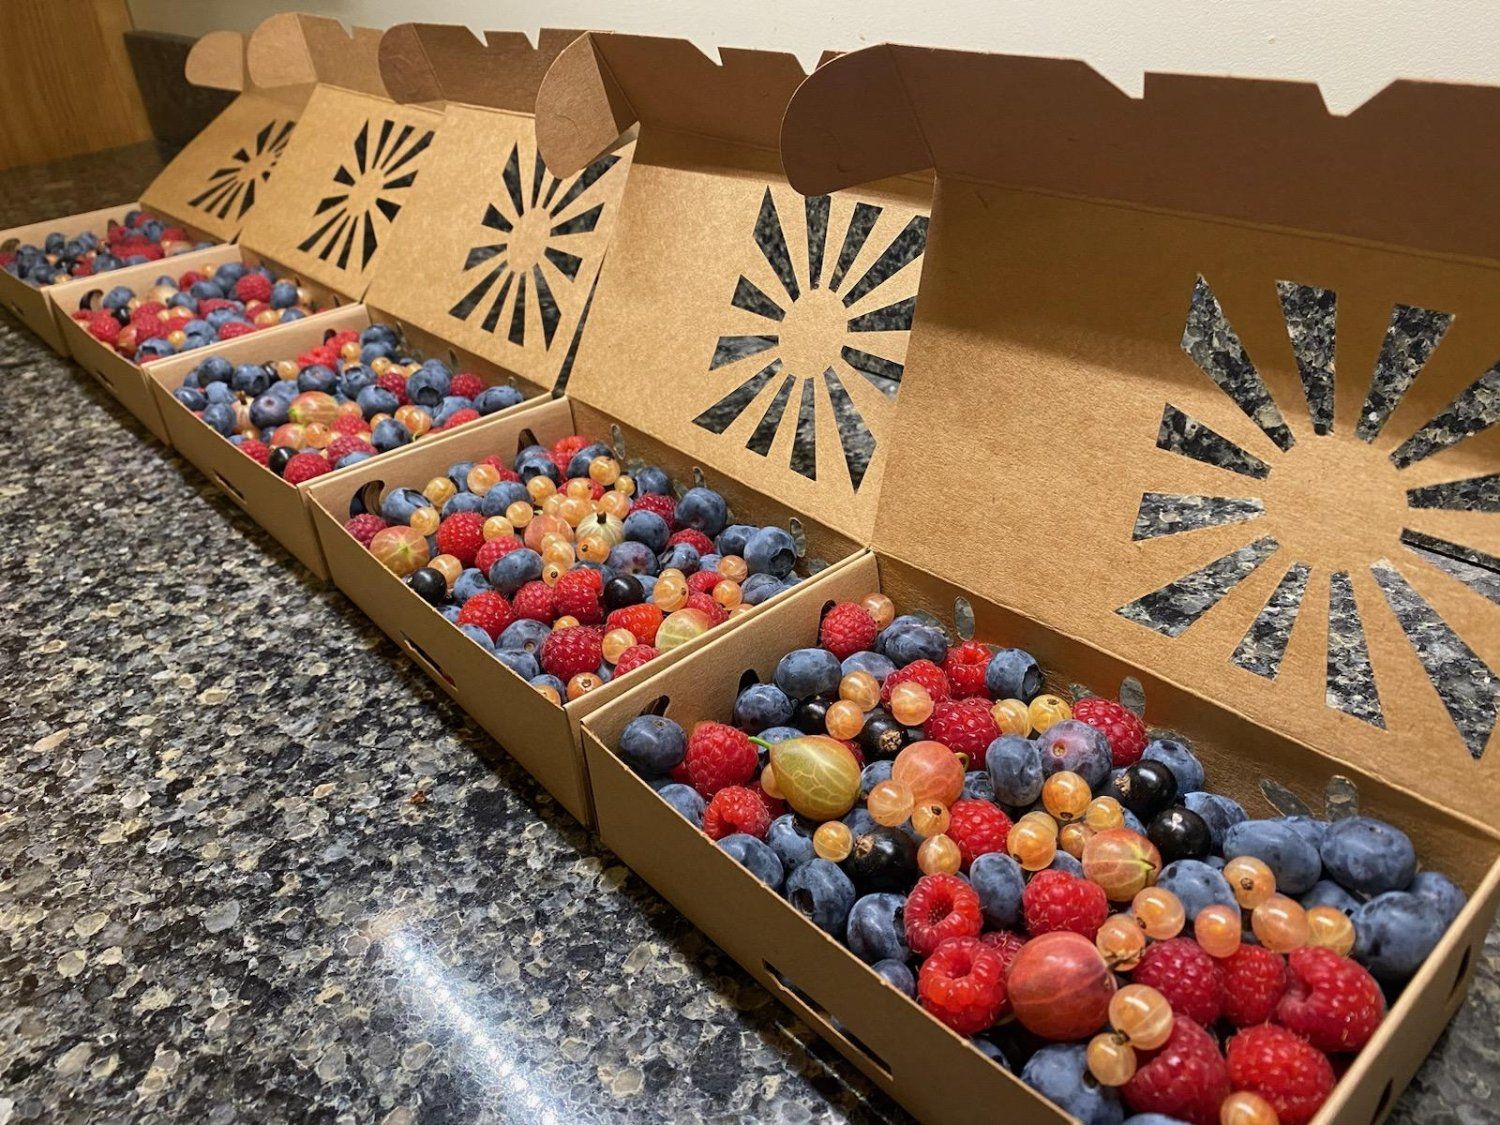 Next Happening: More Berries!